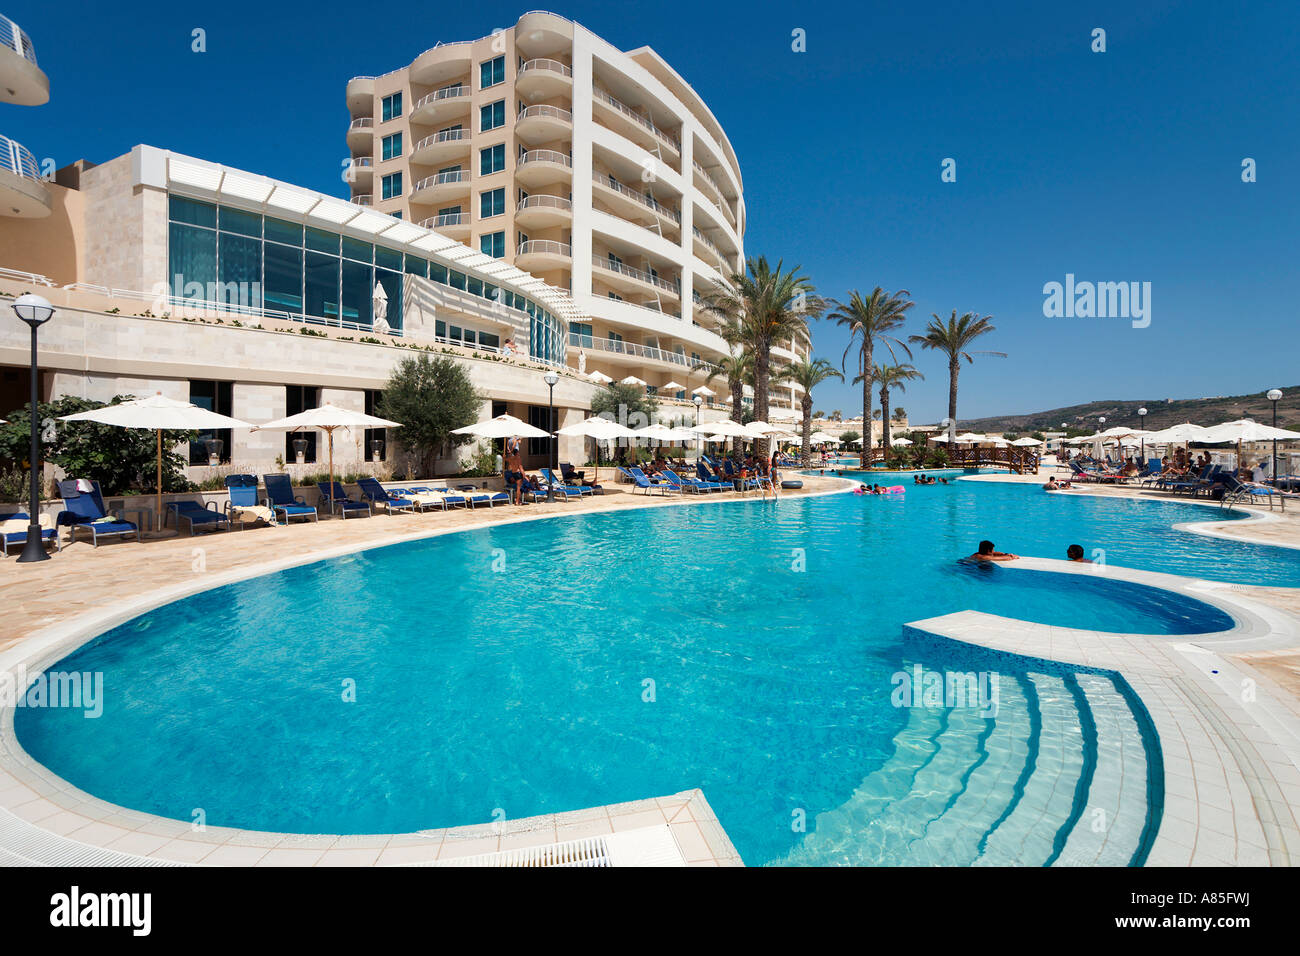 Radisson SAS Golden Sands Hotel, Golden Bay, Malta Stock Photo - Alamy